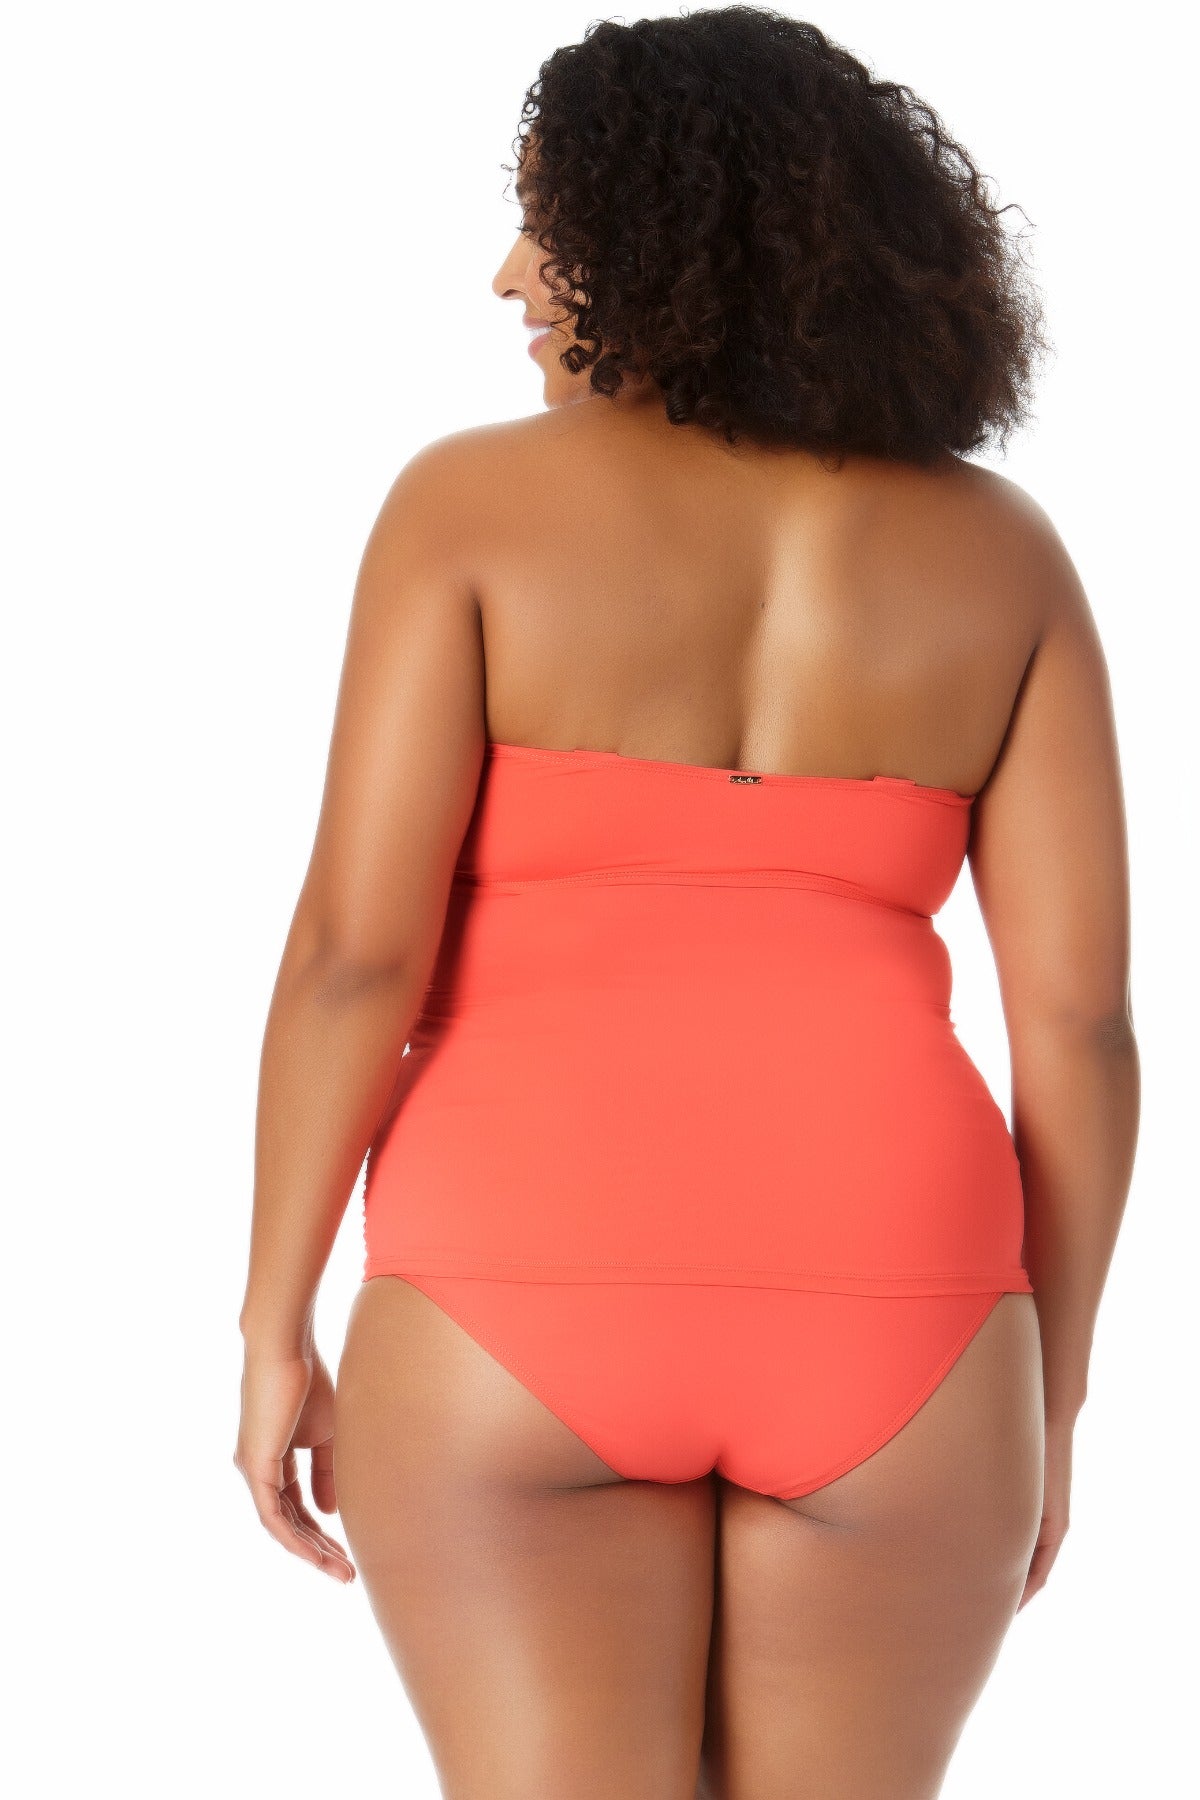 Plus Size Bandeaukini Swim Top in Solid Colors - Anne Cole Plus